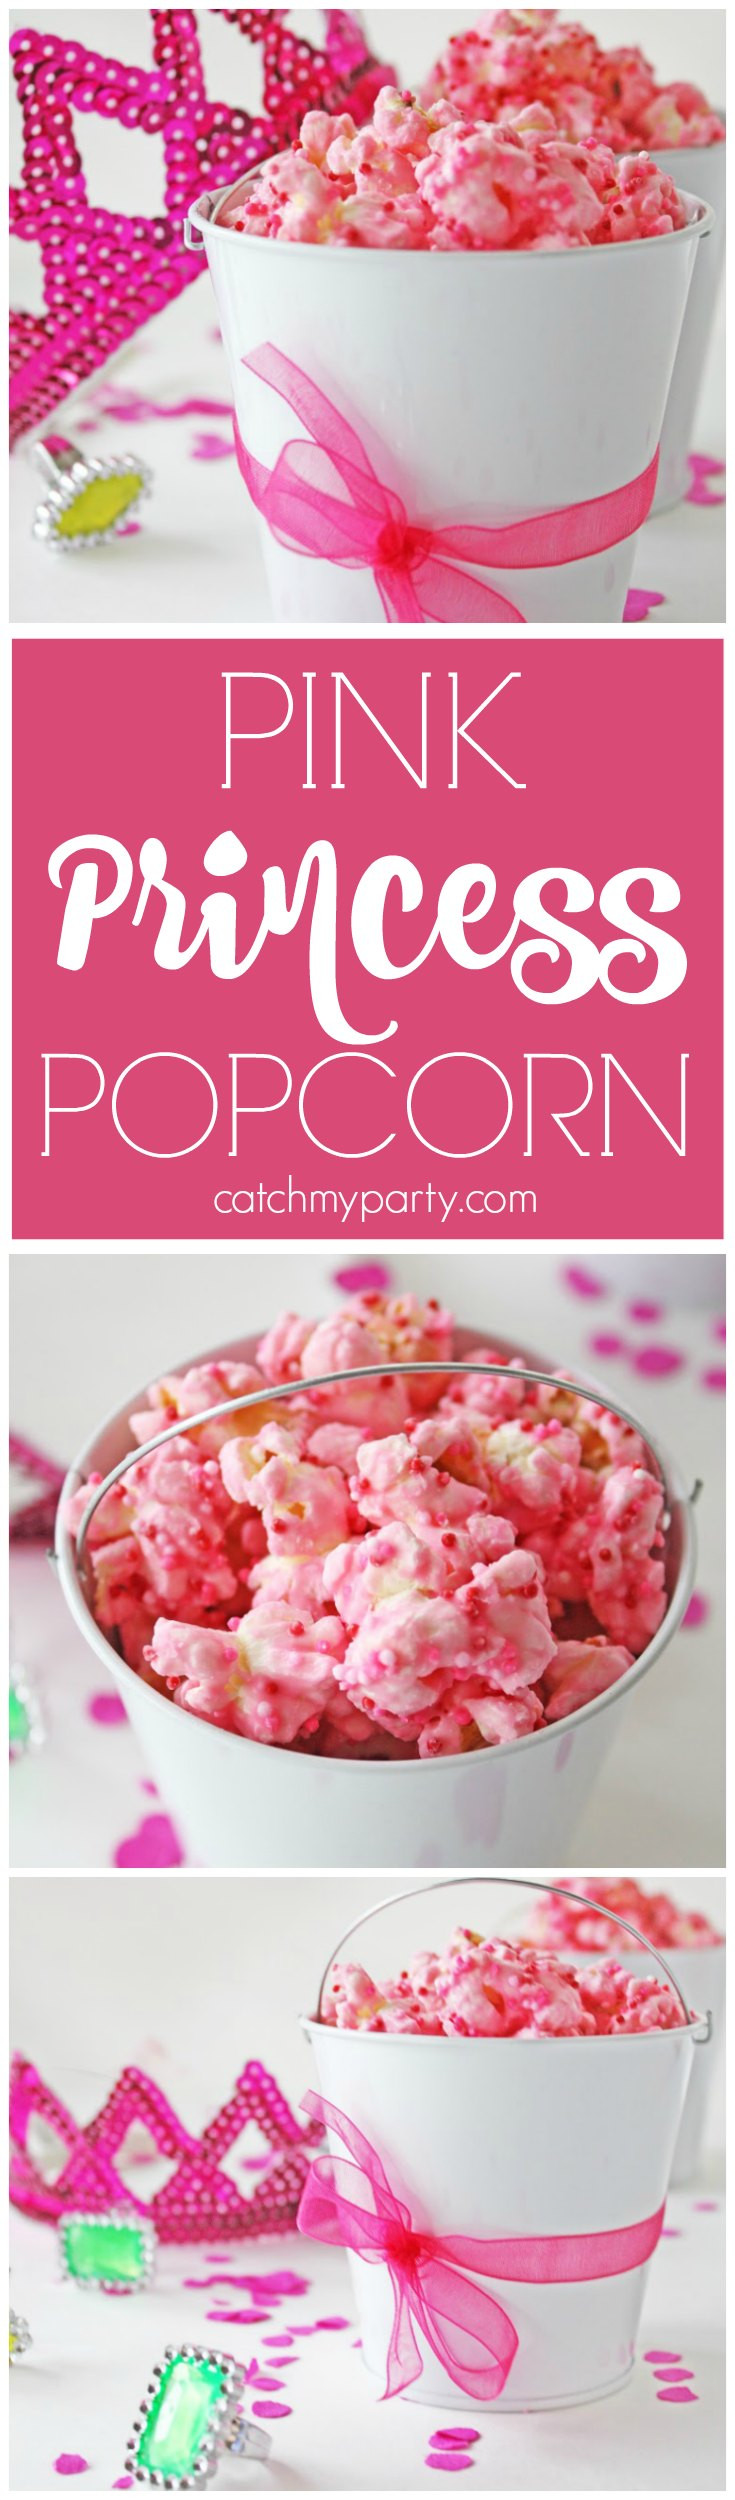 Pink Party Food Ideas
 Pink Princess Popcorn